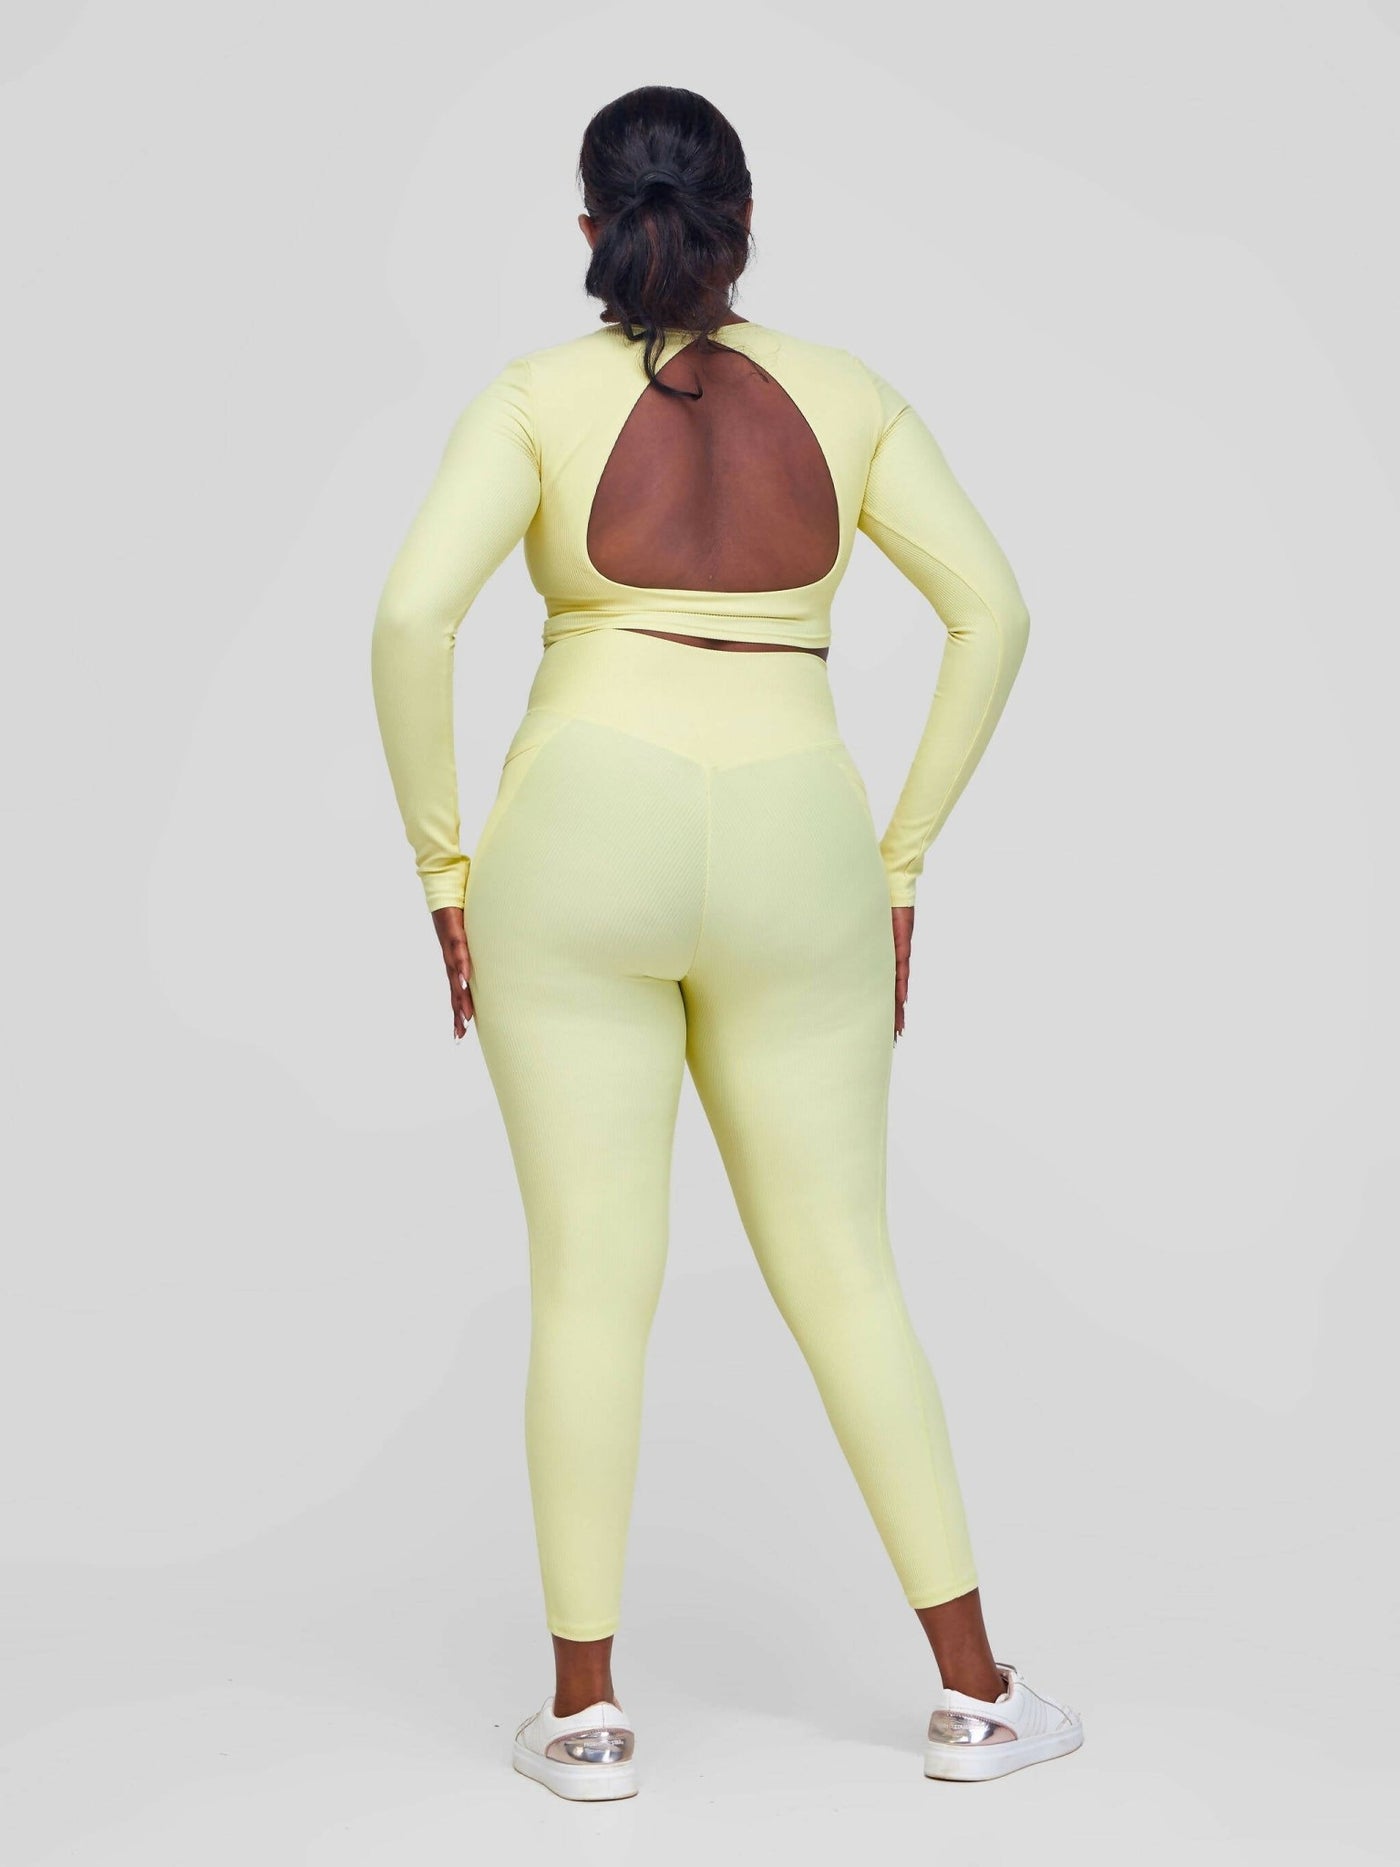 Fabtive Maridadi Long Sleeved Set - Yellow - Shopzetu